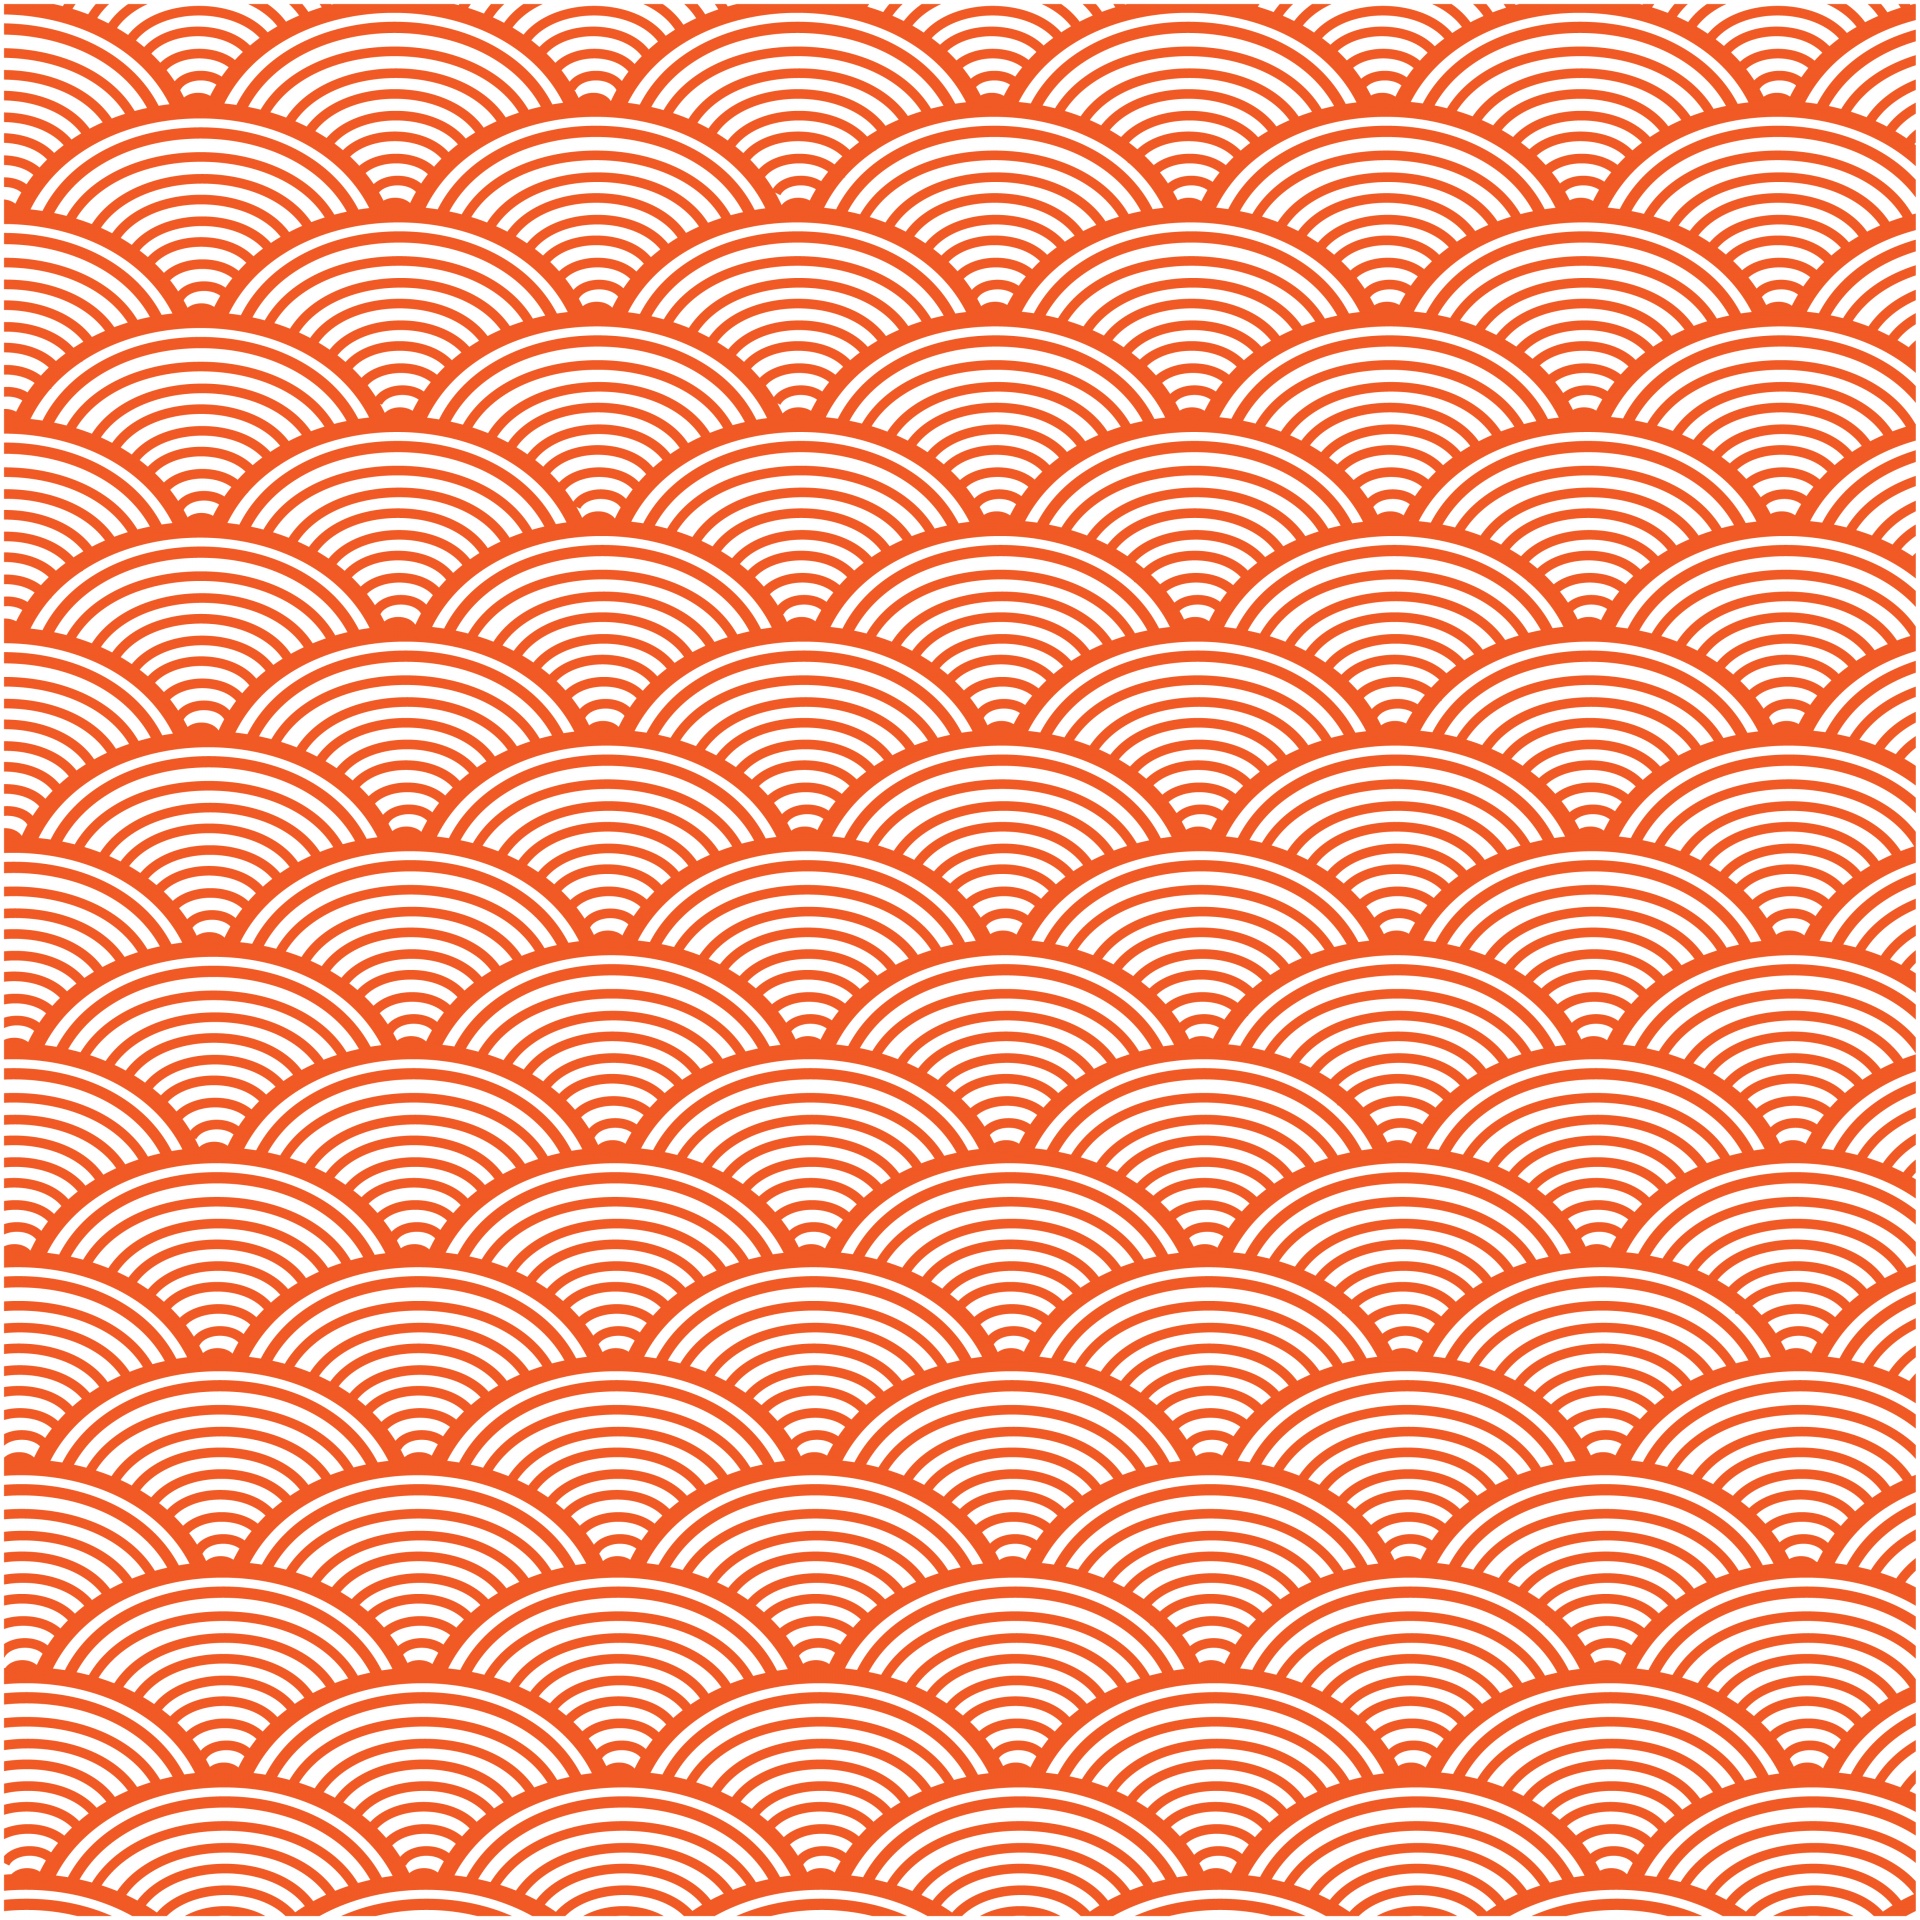 Japanese Wave Wallpaper Background